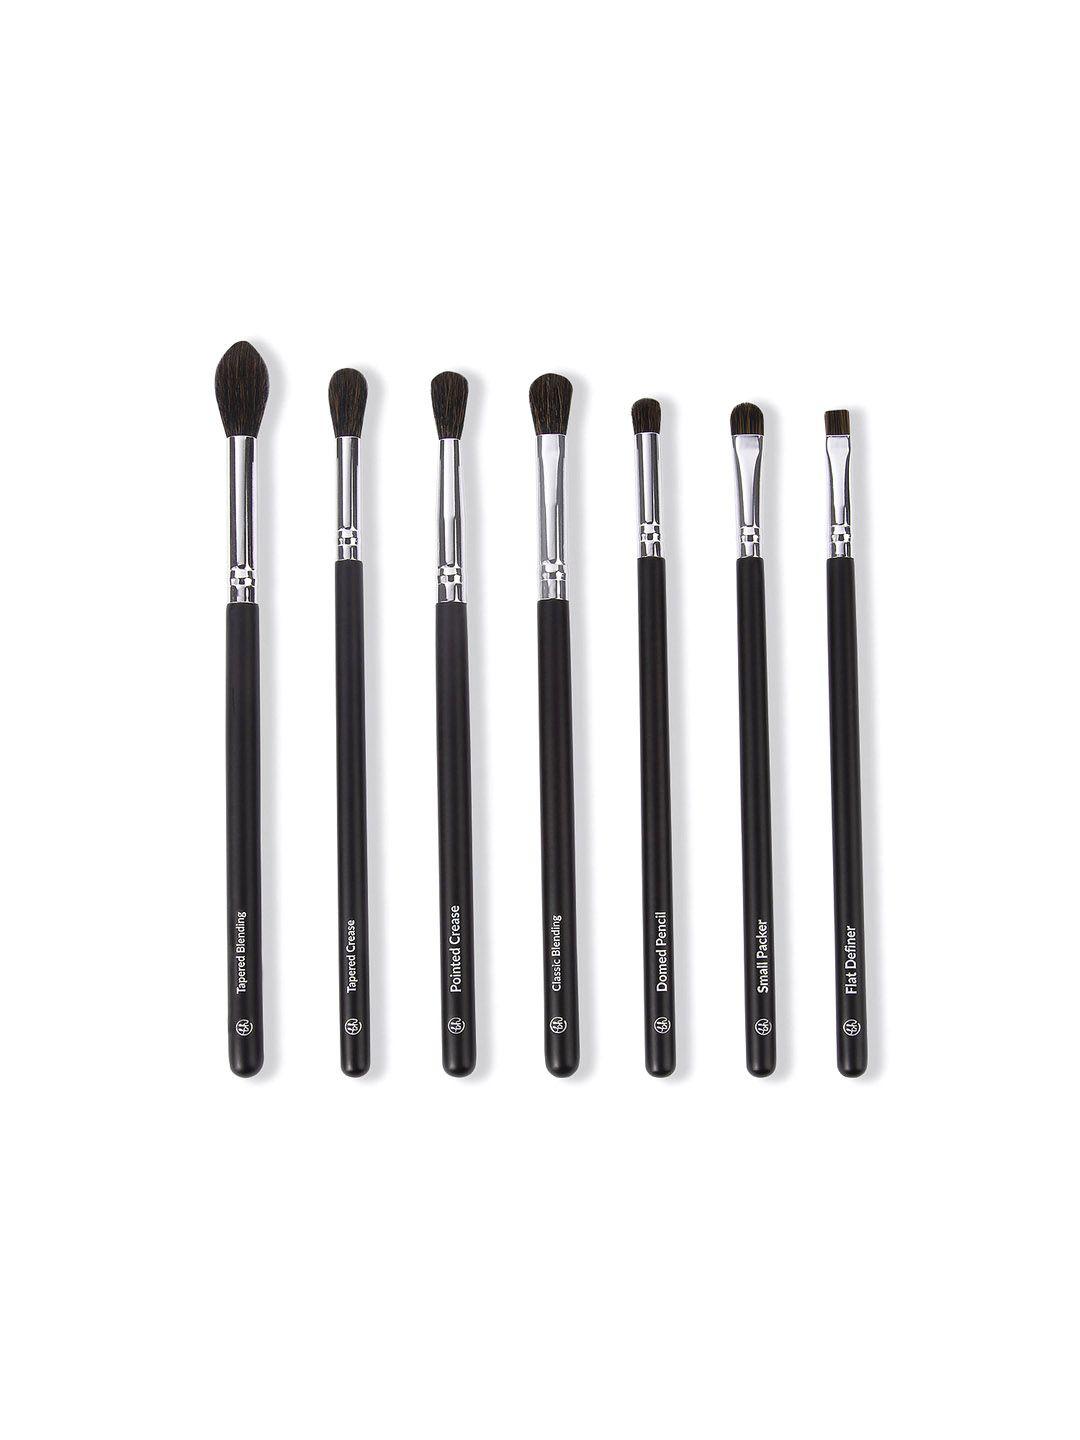 bh cosmetics set of 7 eye essential makeup brushes - black